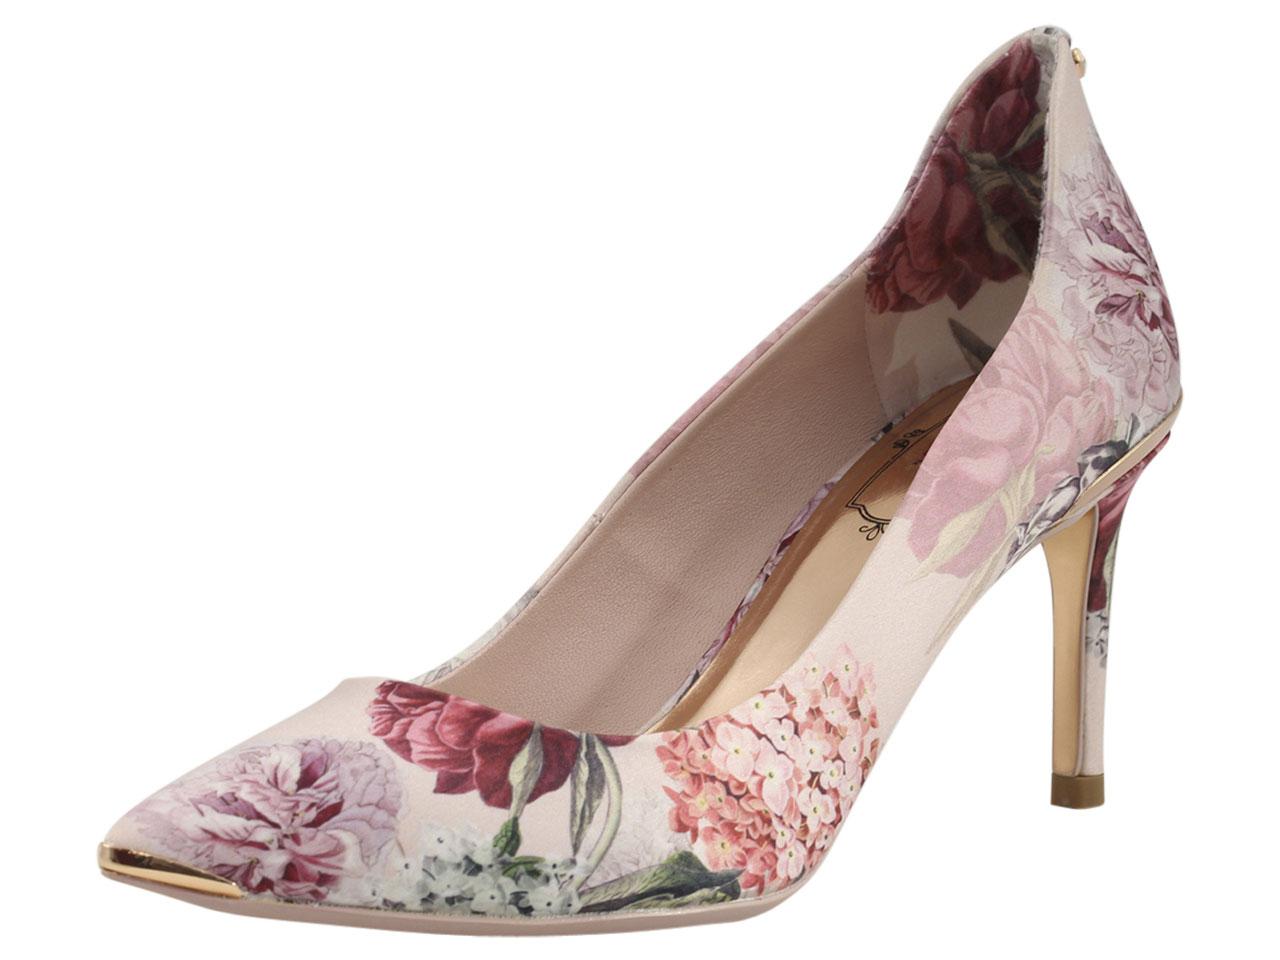 Ted Baker Women's Vyixyn P 2 Pumps Heels Shoes - Pink - 7.5 B(M) US